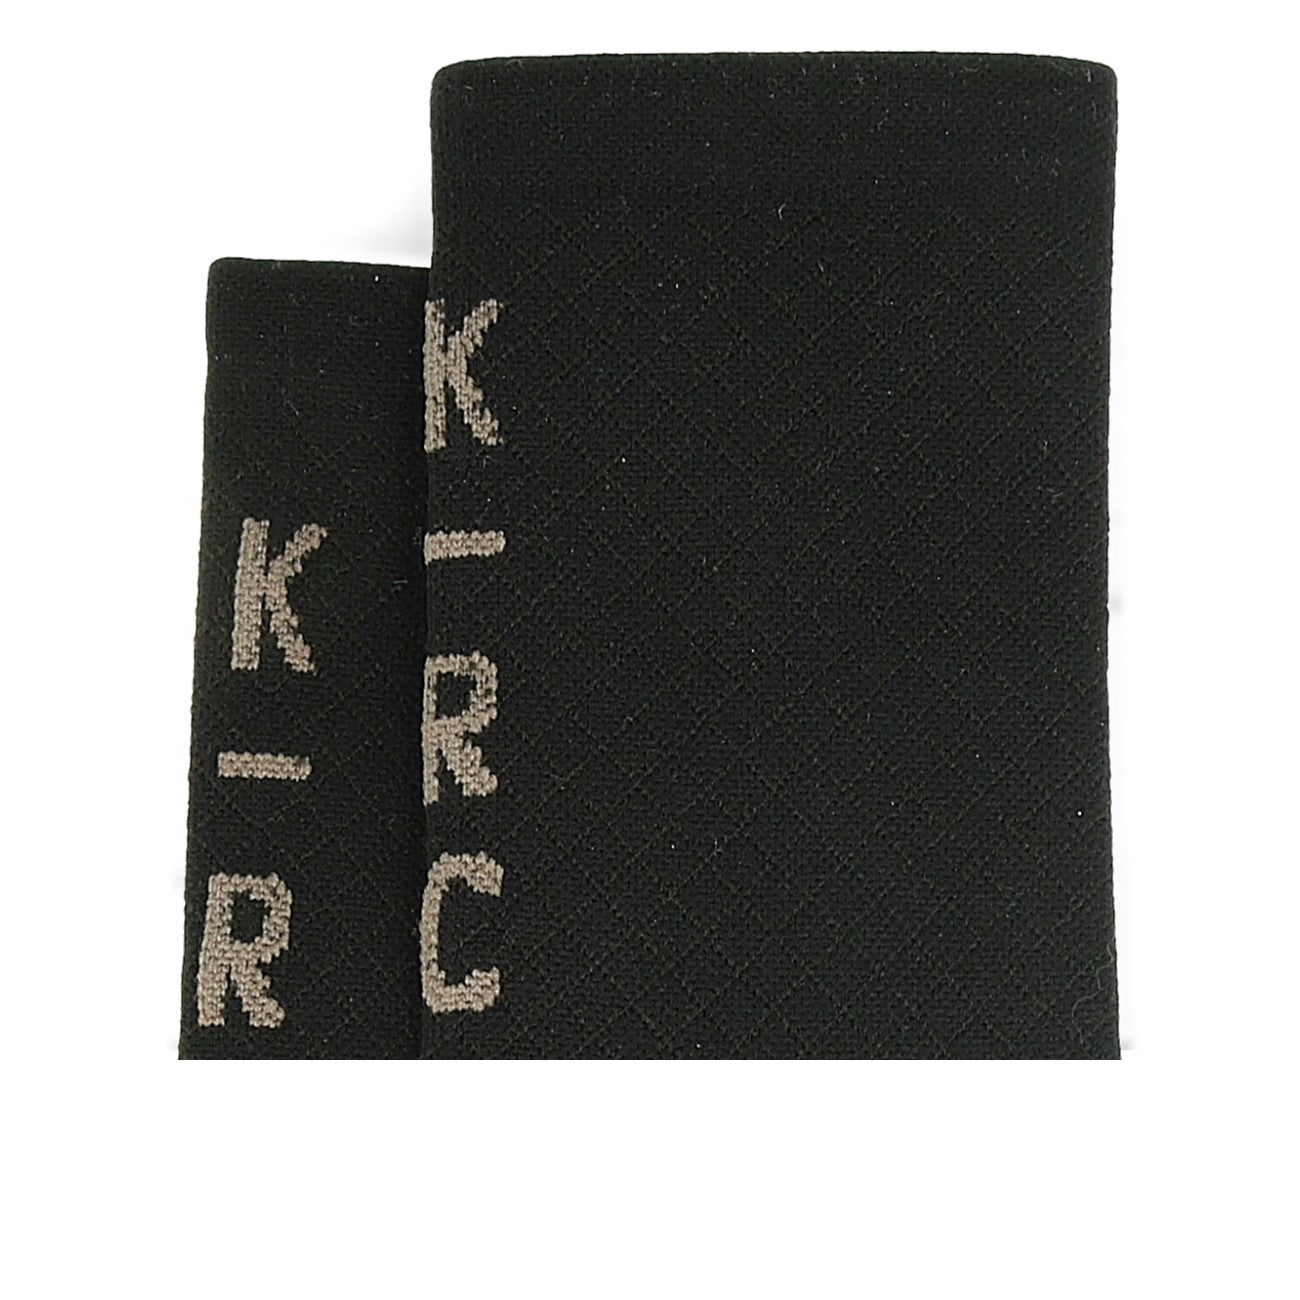 Koreatown Run Club KRC Performance Socks Black